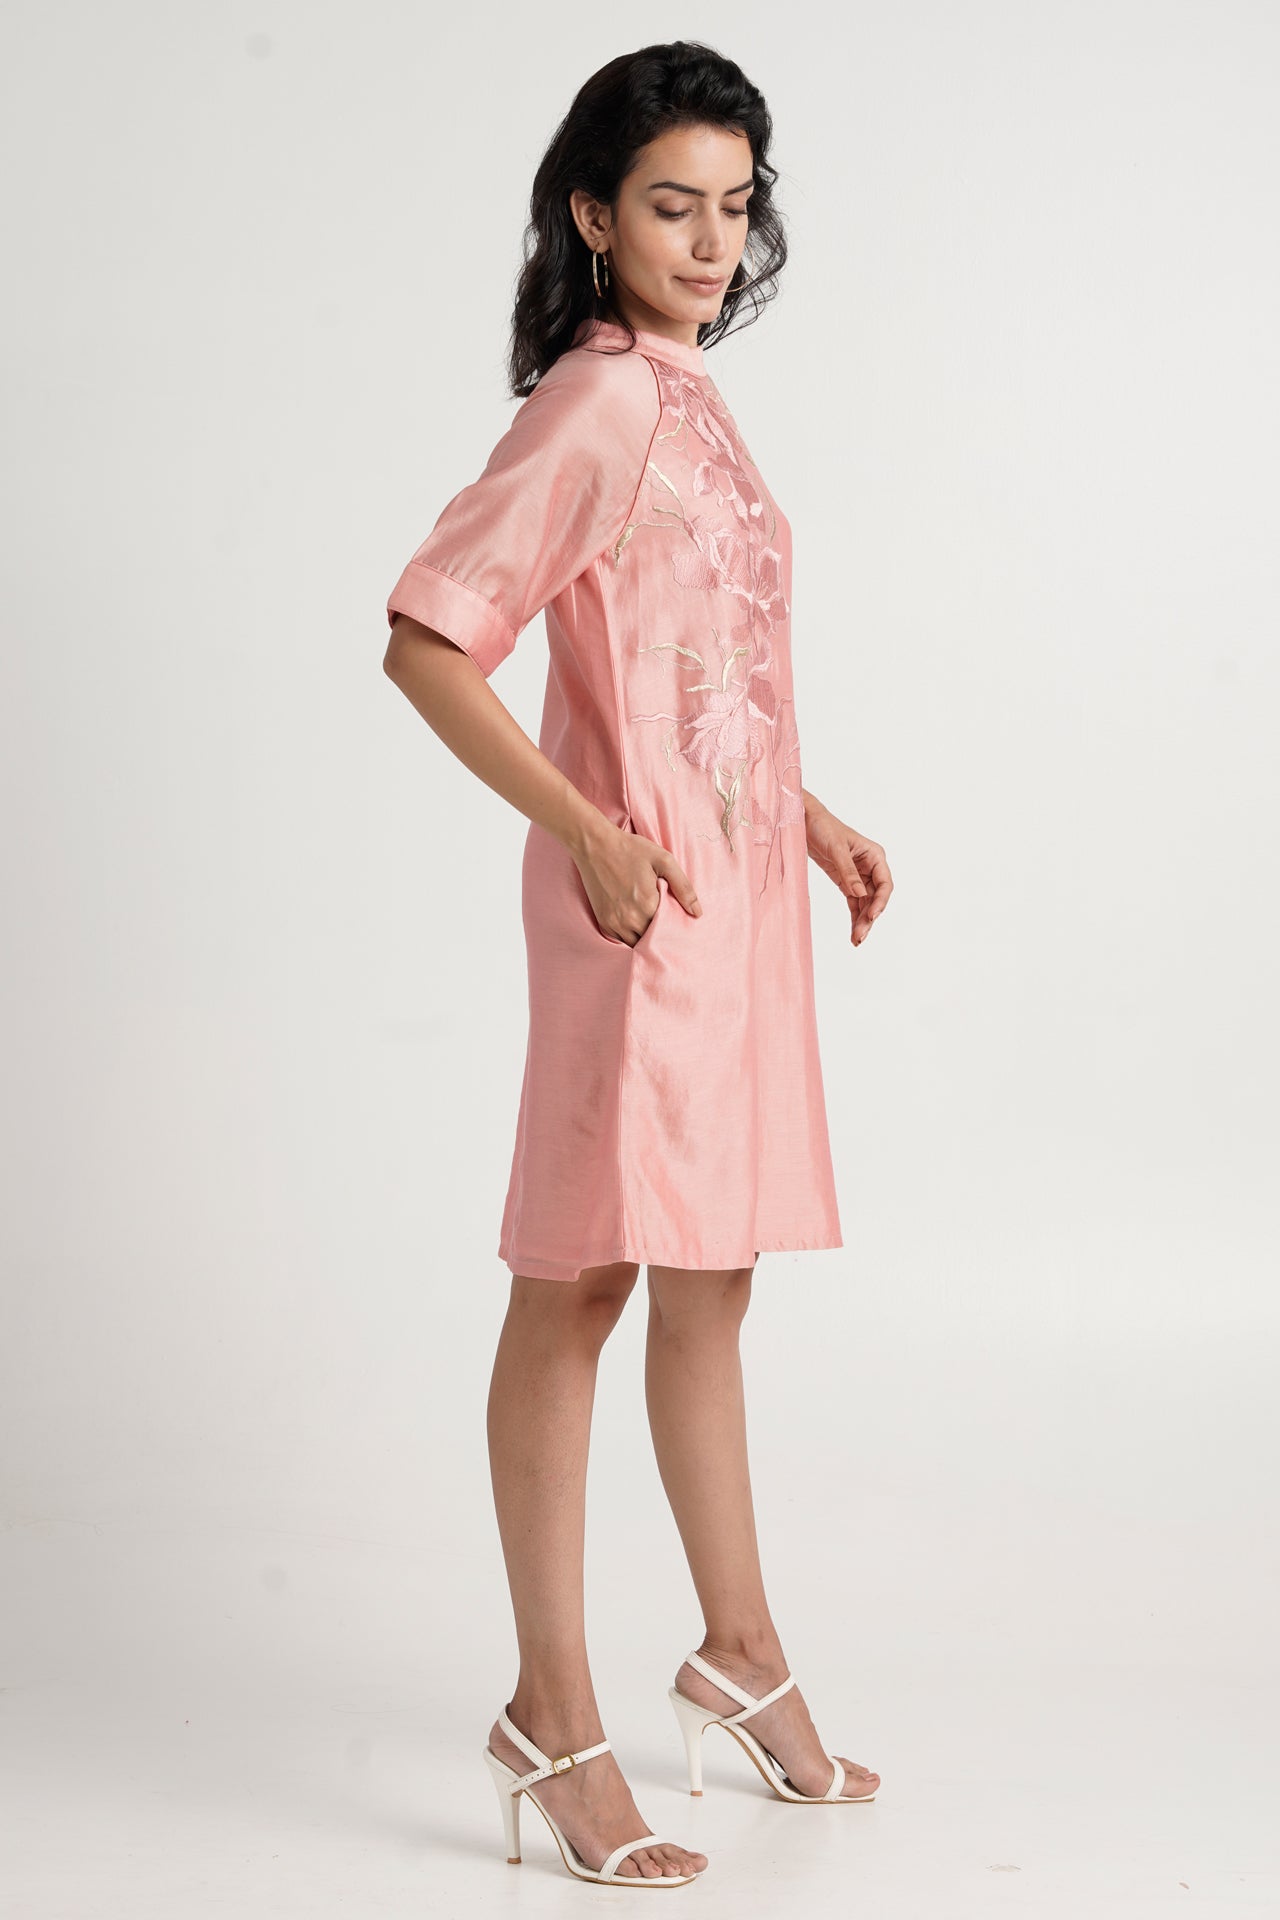 Old Rose Rubia 2.0 - Pentagon Short Dress